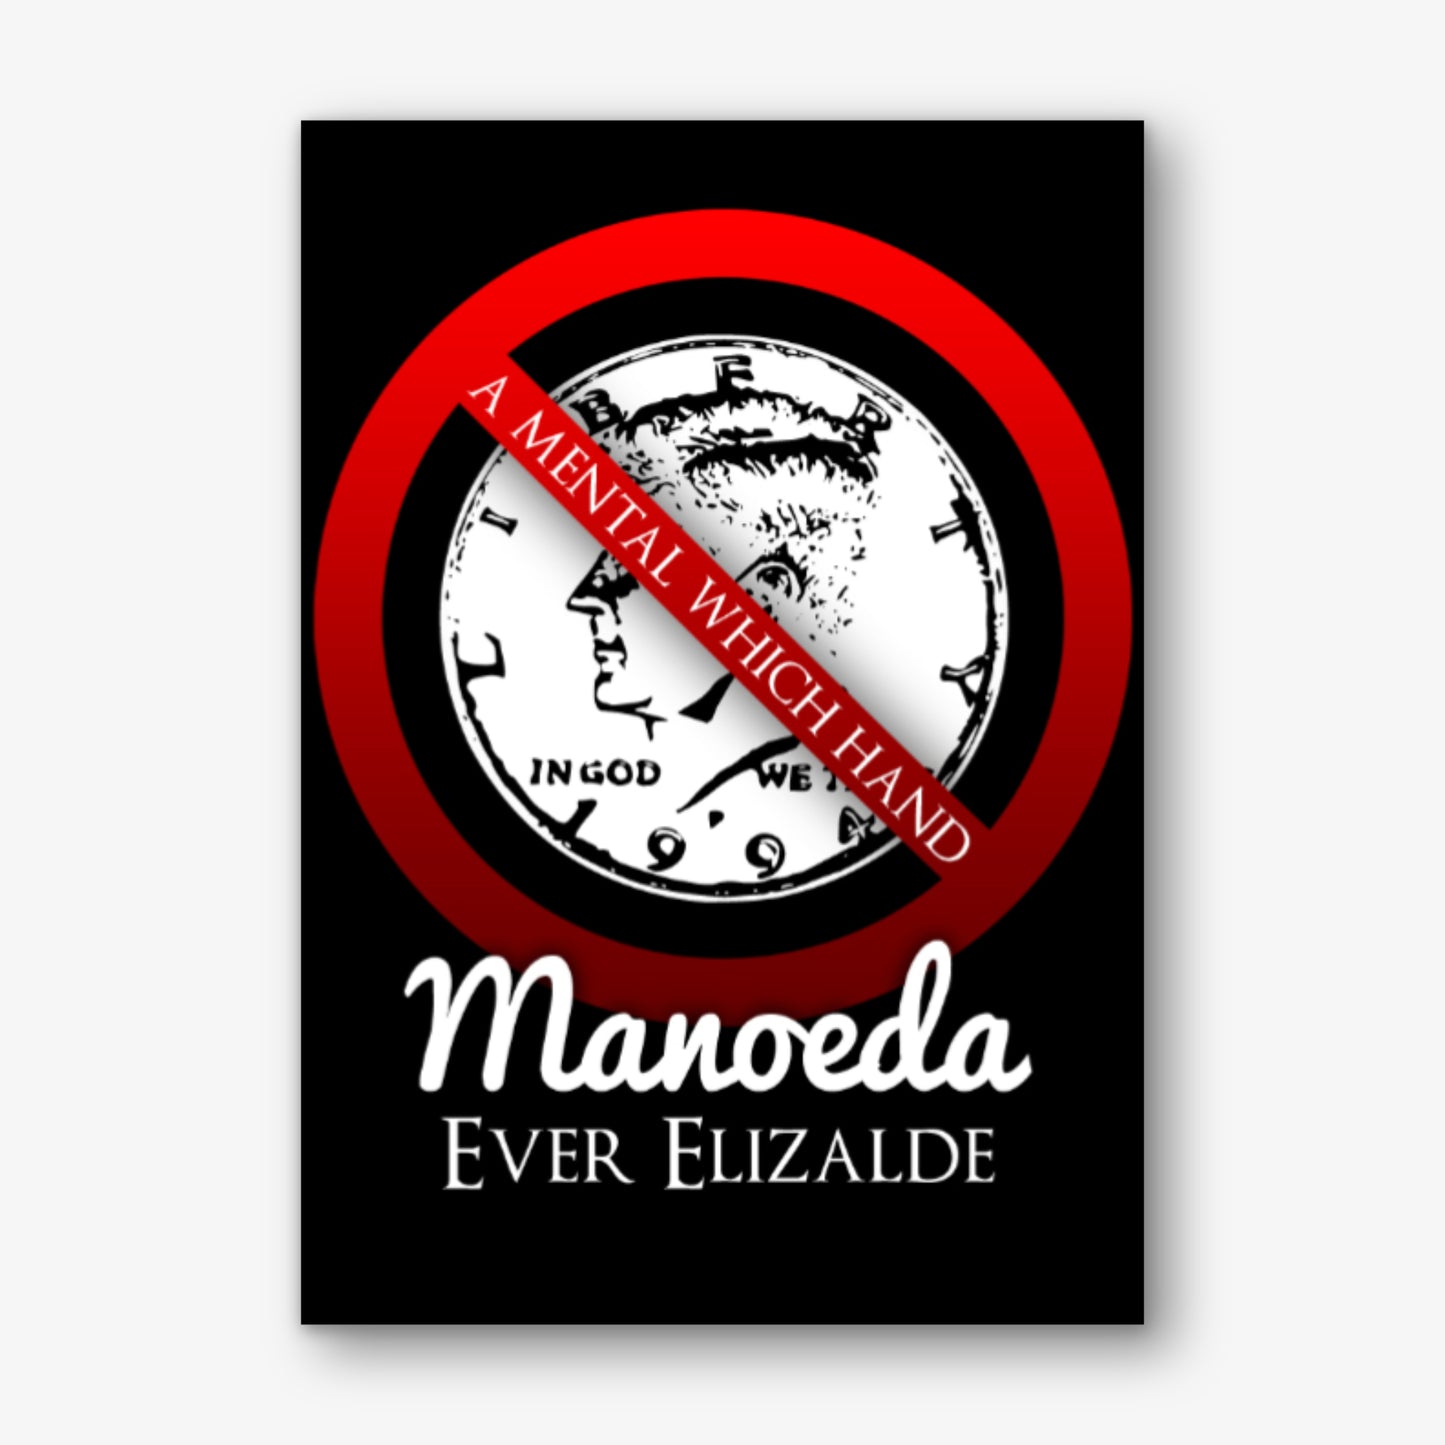 Manoeda by Ever Elizalde